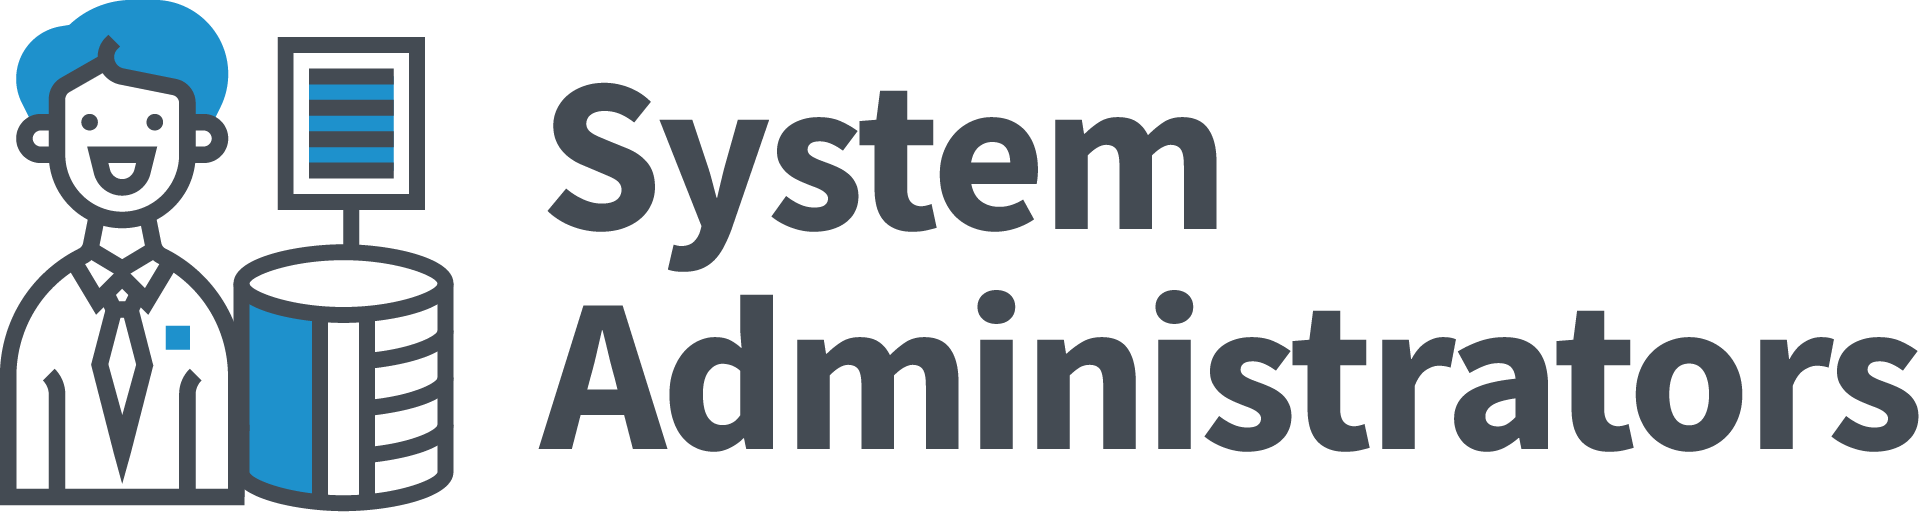 System administrator